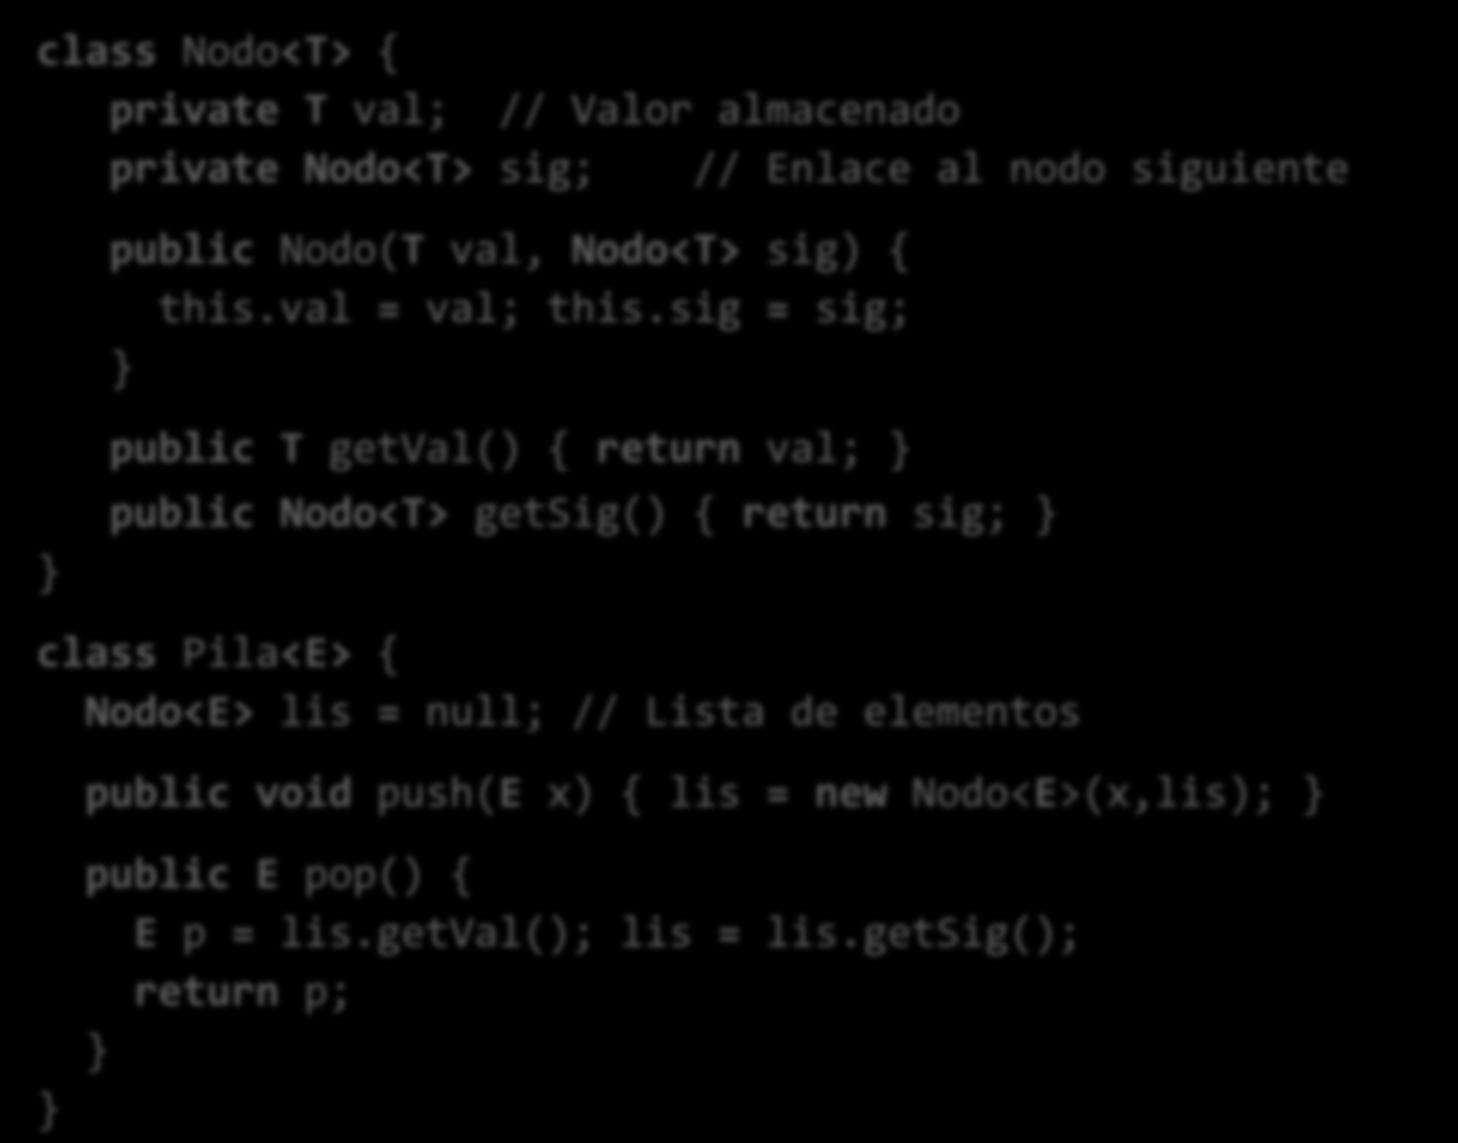 Clase Parametrizada (I) class Nodo<T> { private T val; // Valor almacenado private Nodo<T> sig; // Enlace al nodo siguiente public Nodo(T val, Nodo<T> sig) { this.val = val; this.